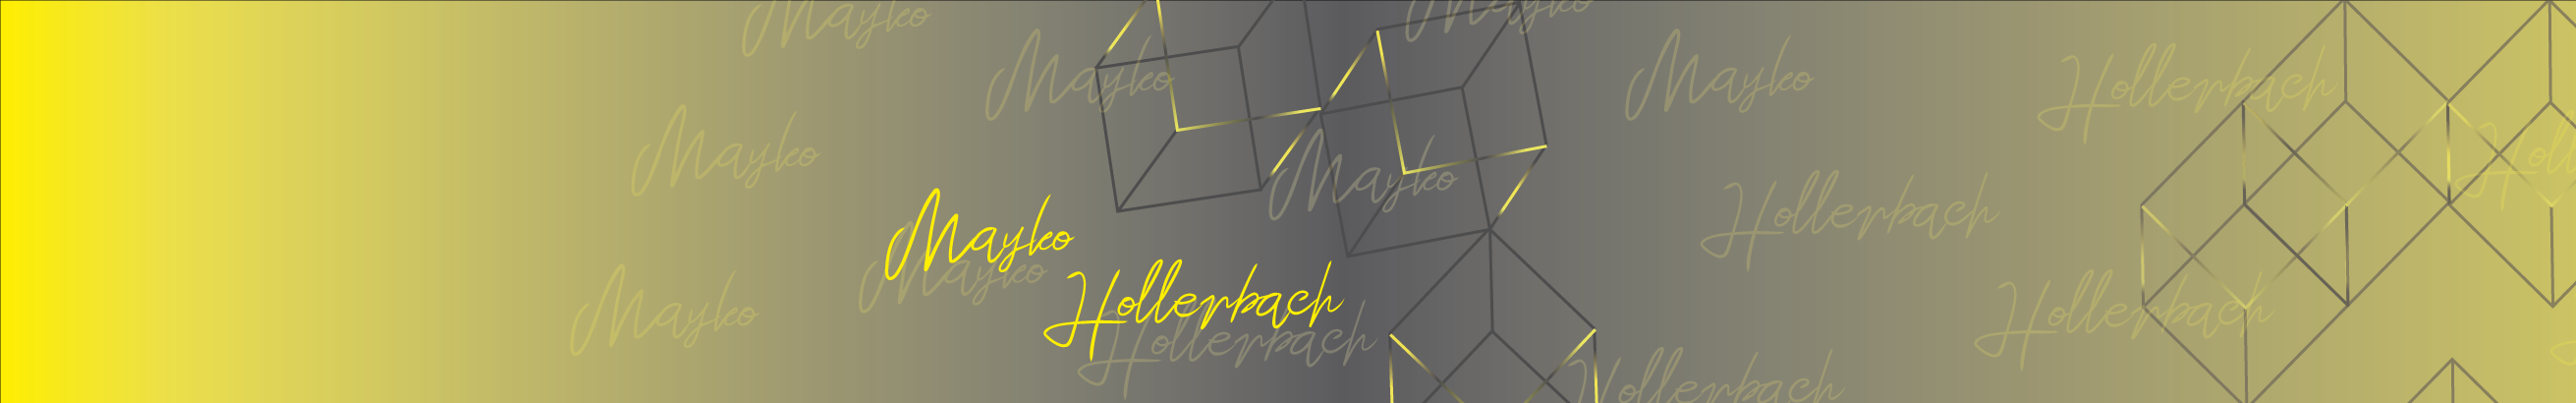 Banner de perfil de Mayko Hollerbach